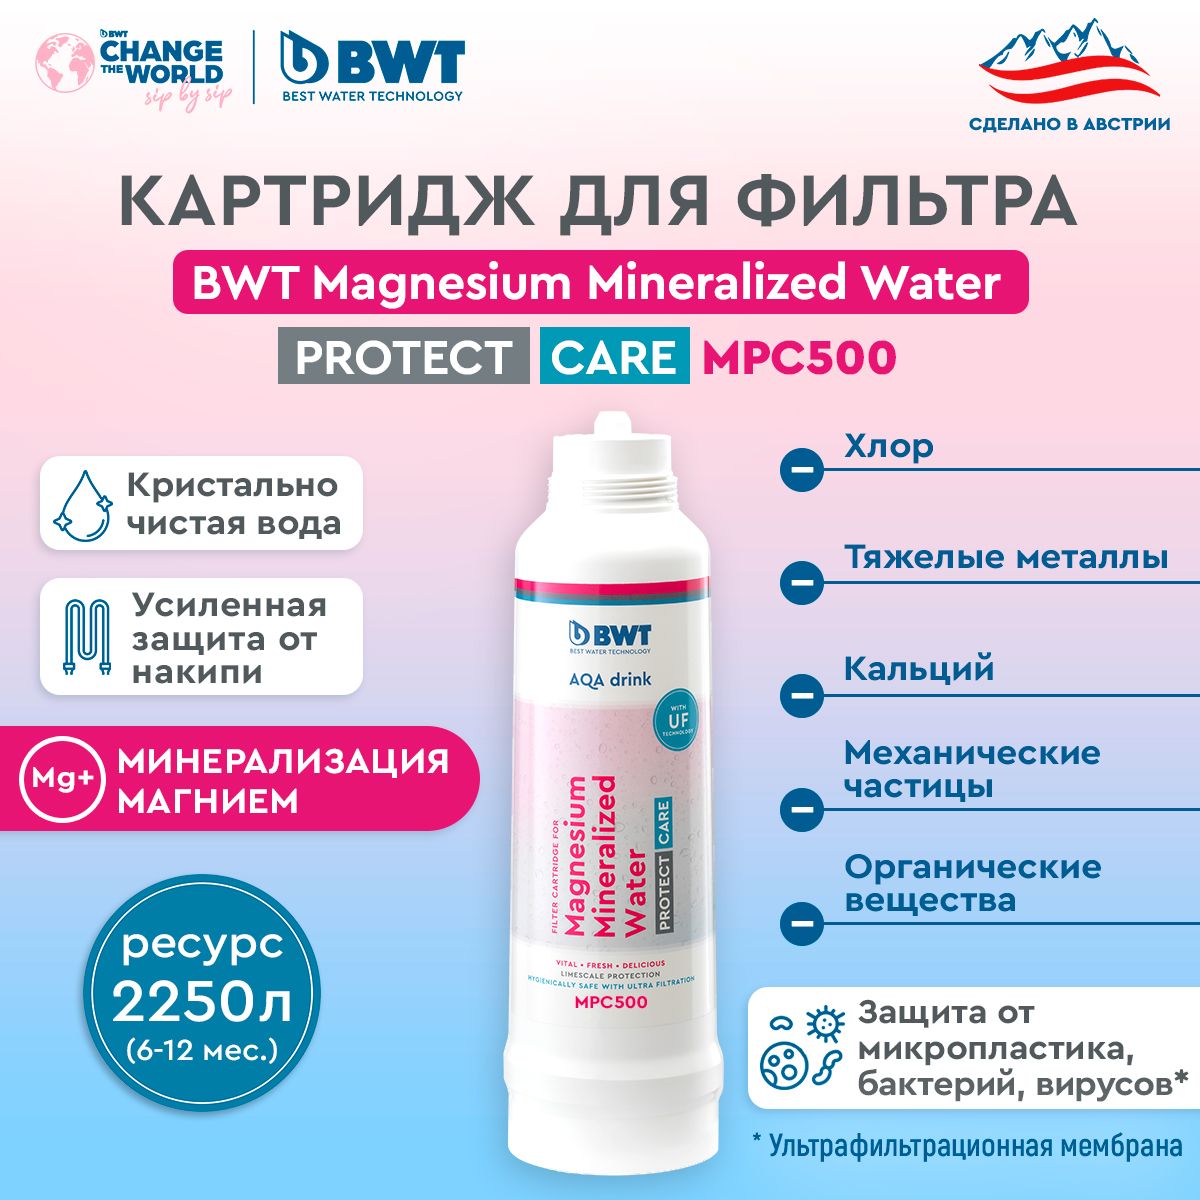 Картридж для фильтра BWT MPC500 Magnesium Mineralized Water усиленная защита